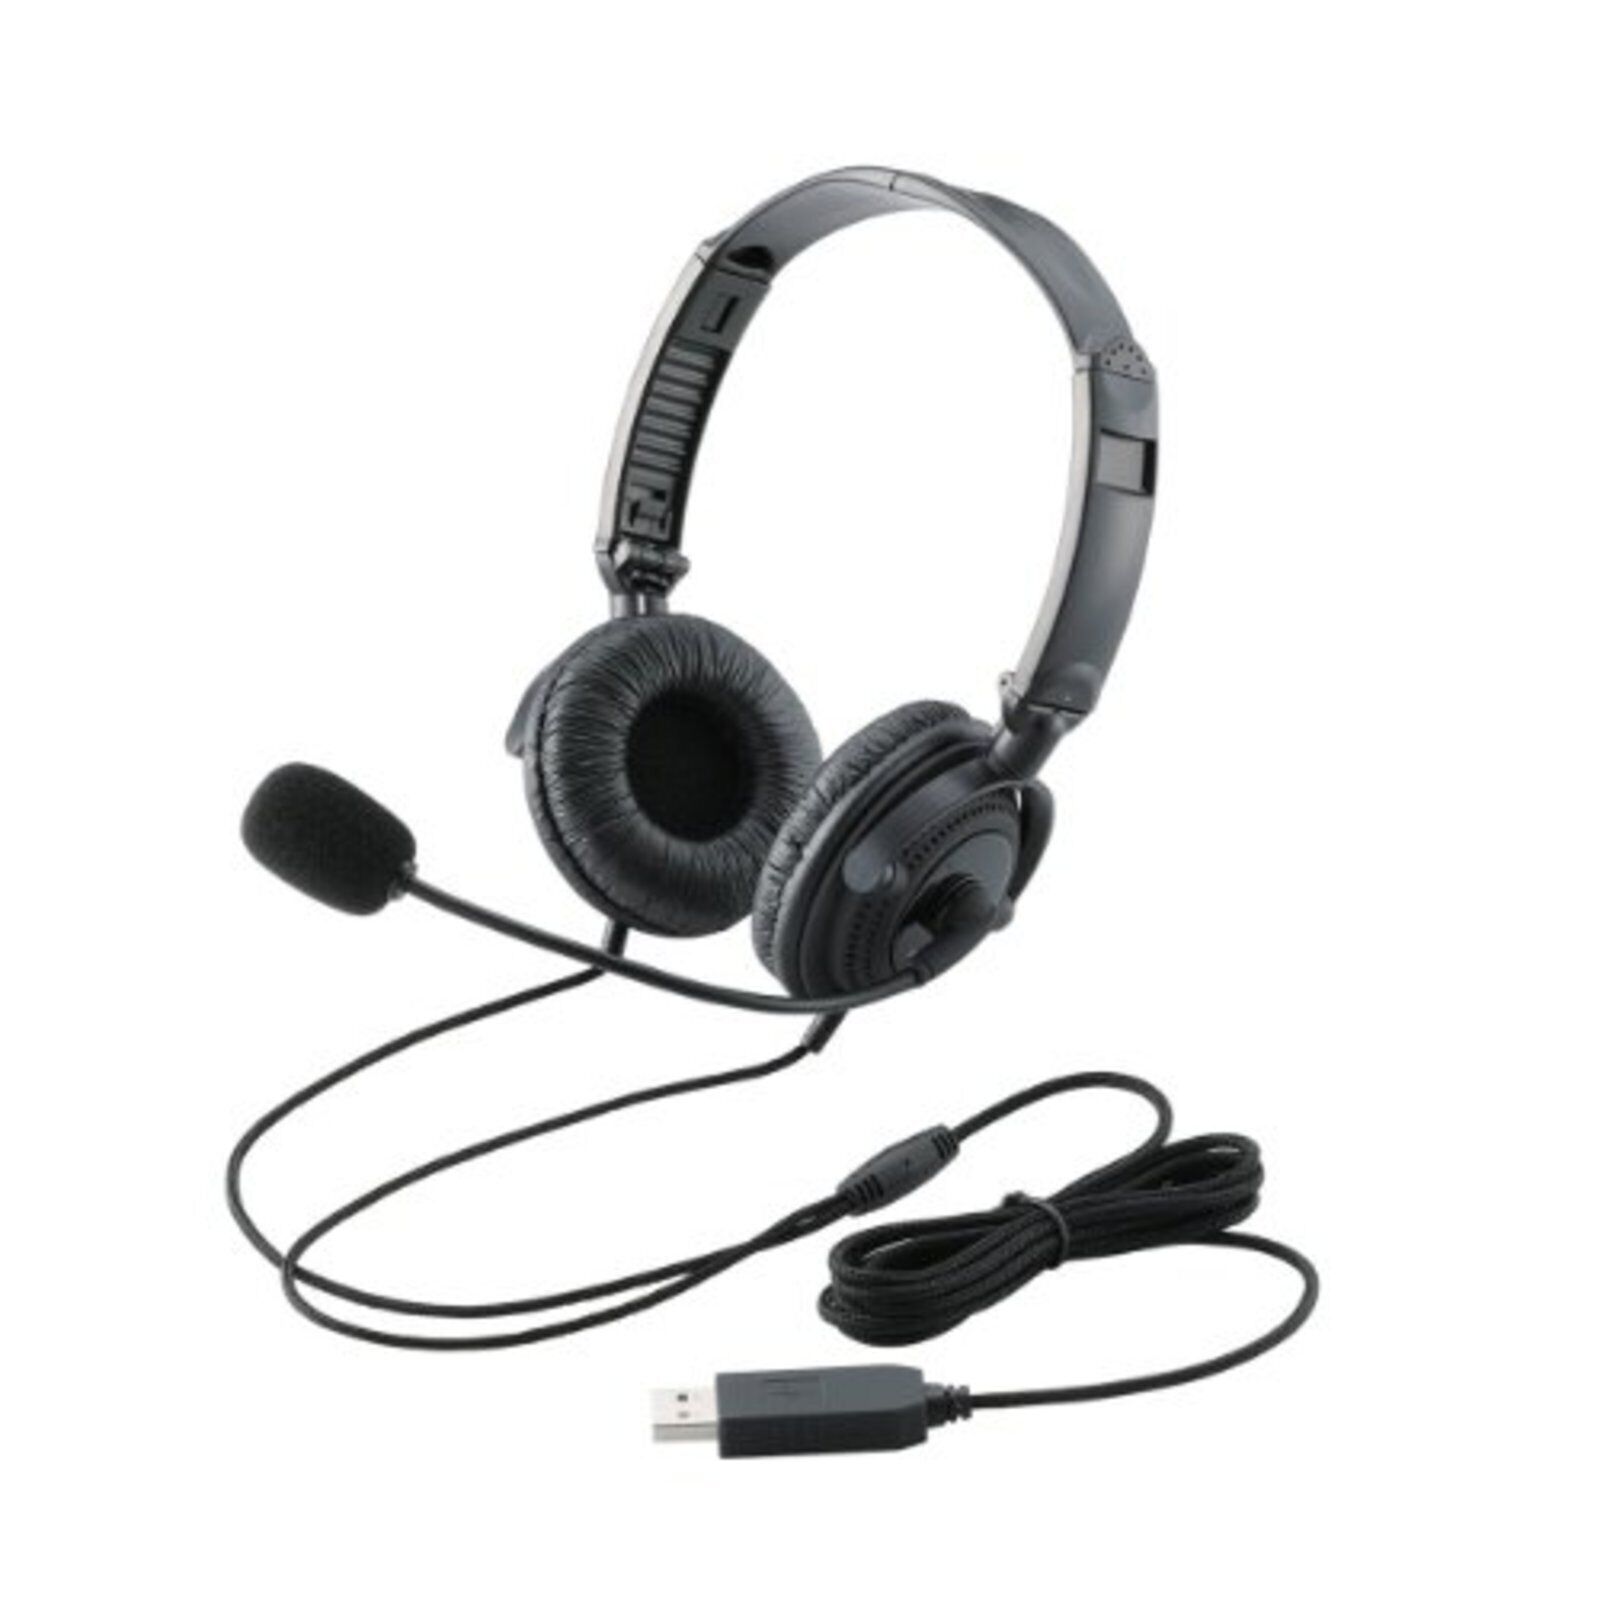 Elecom headset microphone USB both ears overhead 1.8m40mm black HS-HP20UBK F/S